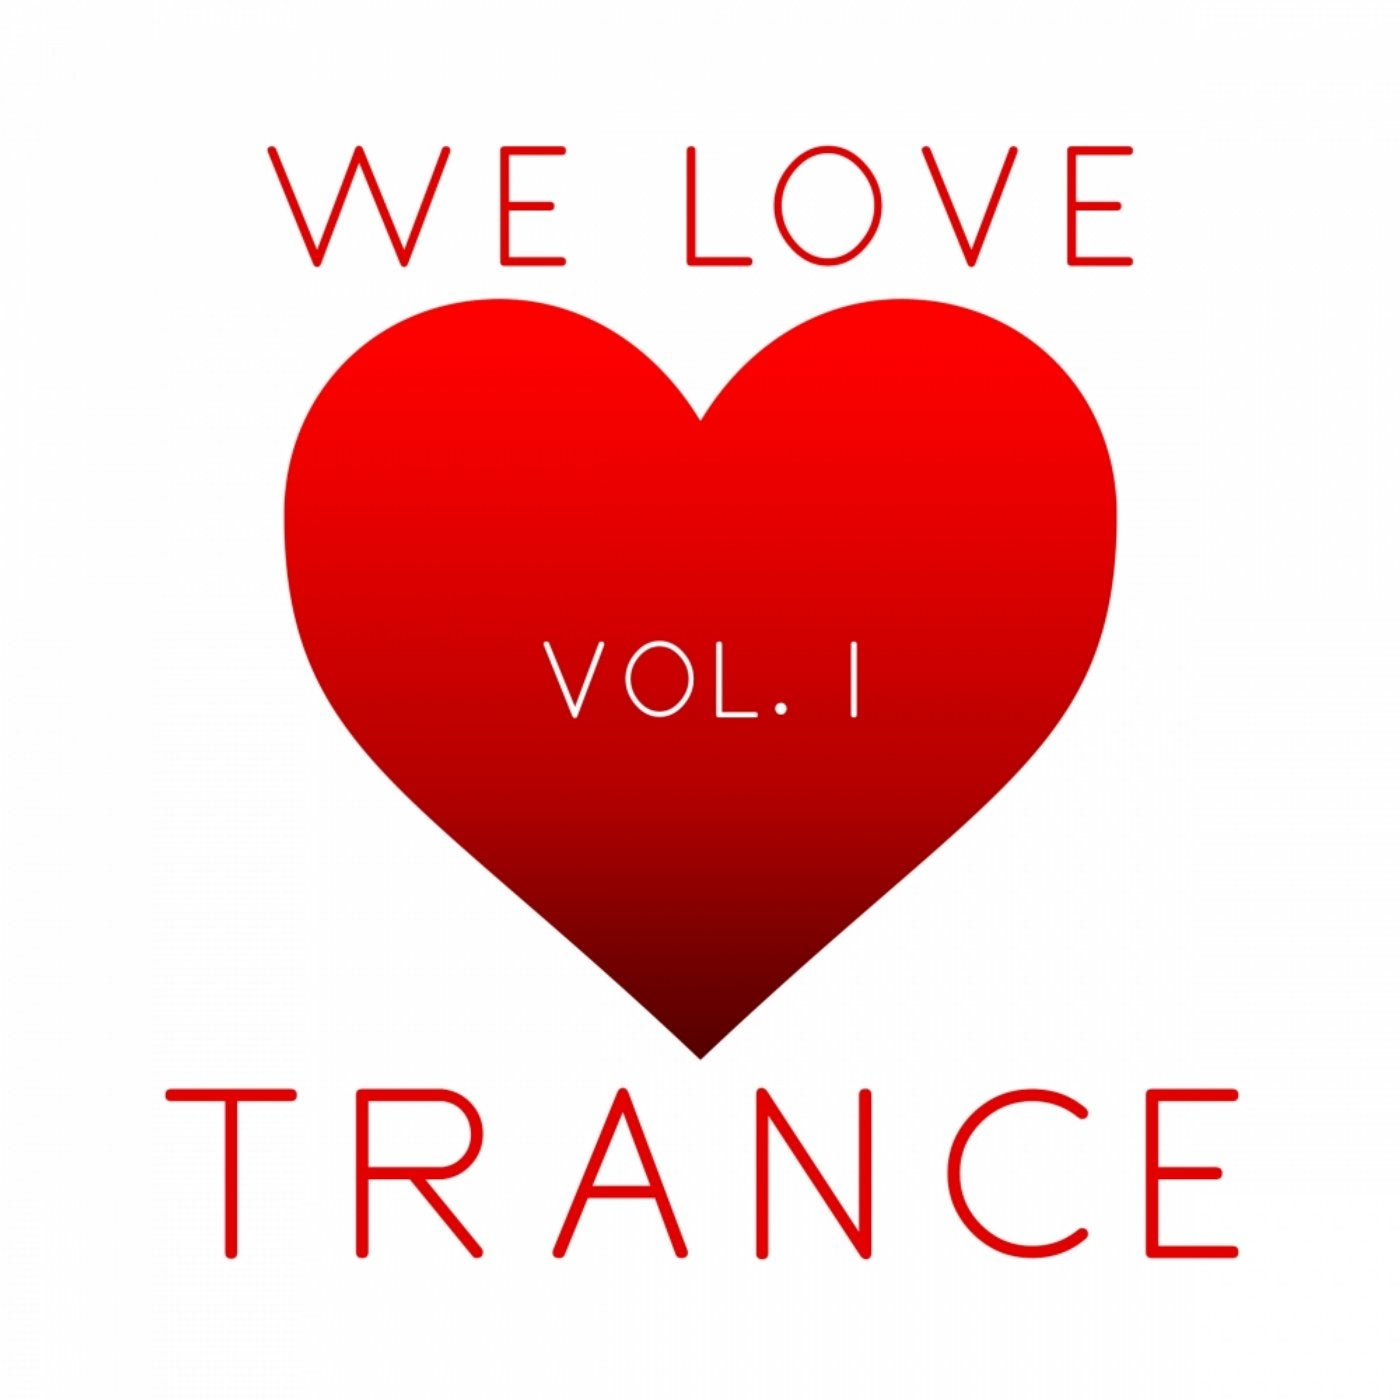 We Love Trance, Vol. 1